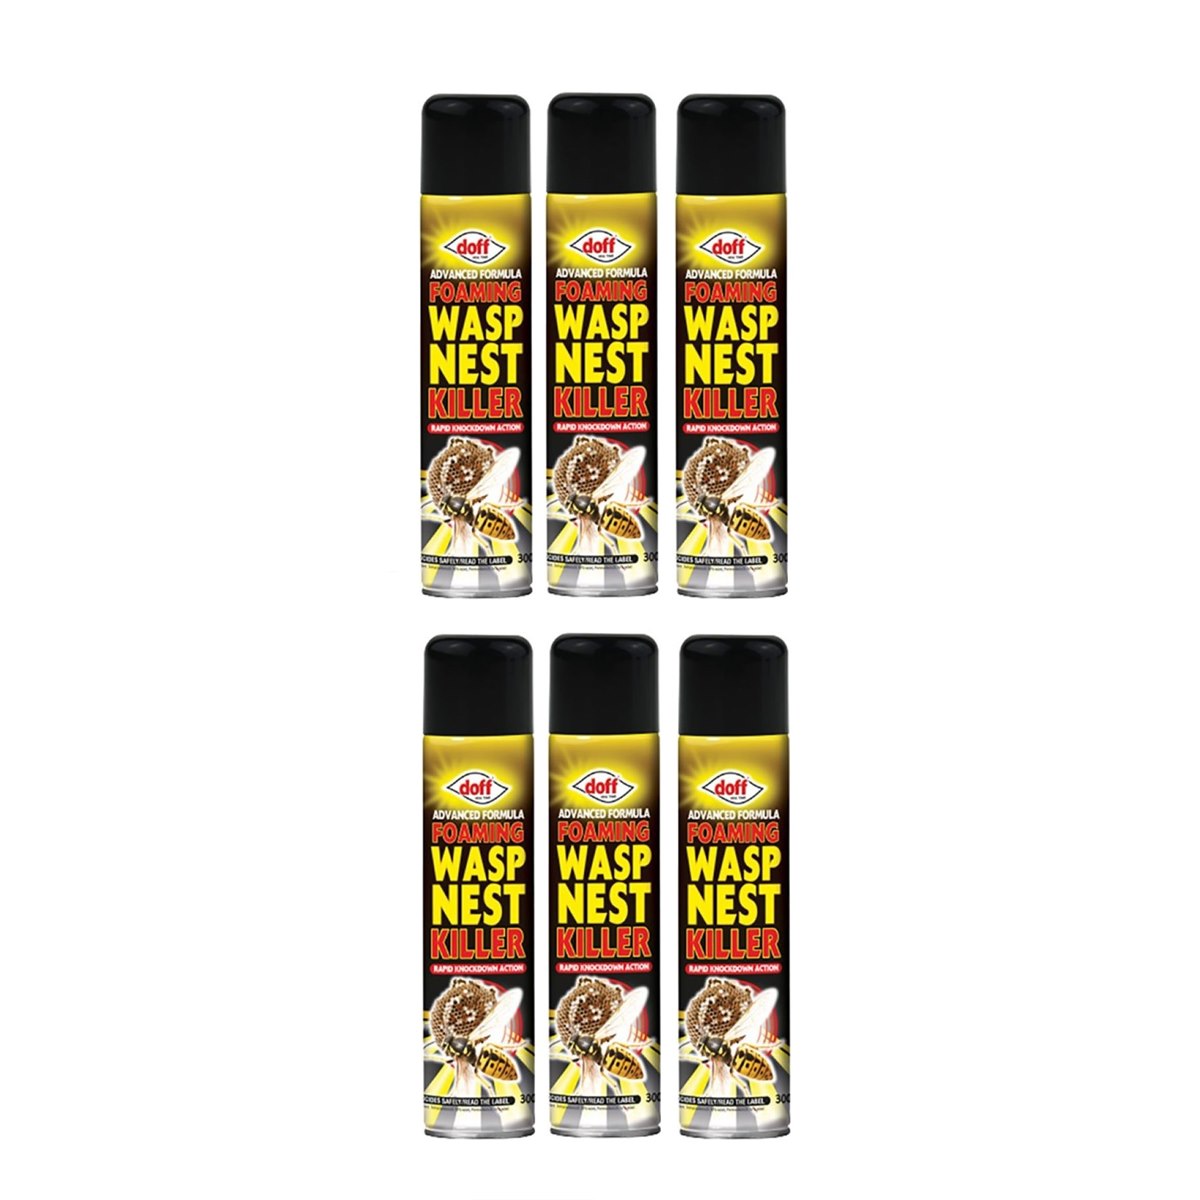 Case of 6 x Doff Advanced Formula Foaming Wasp Nest Killer Spray 300ml